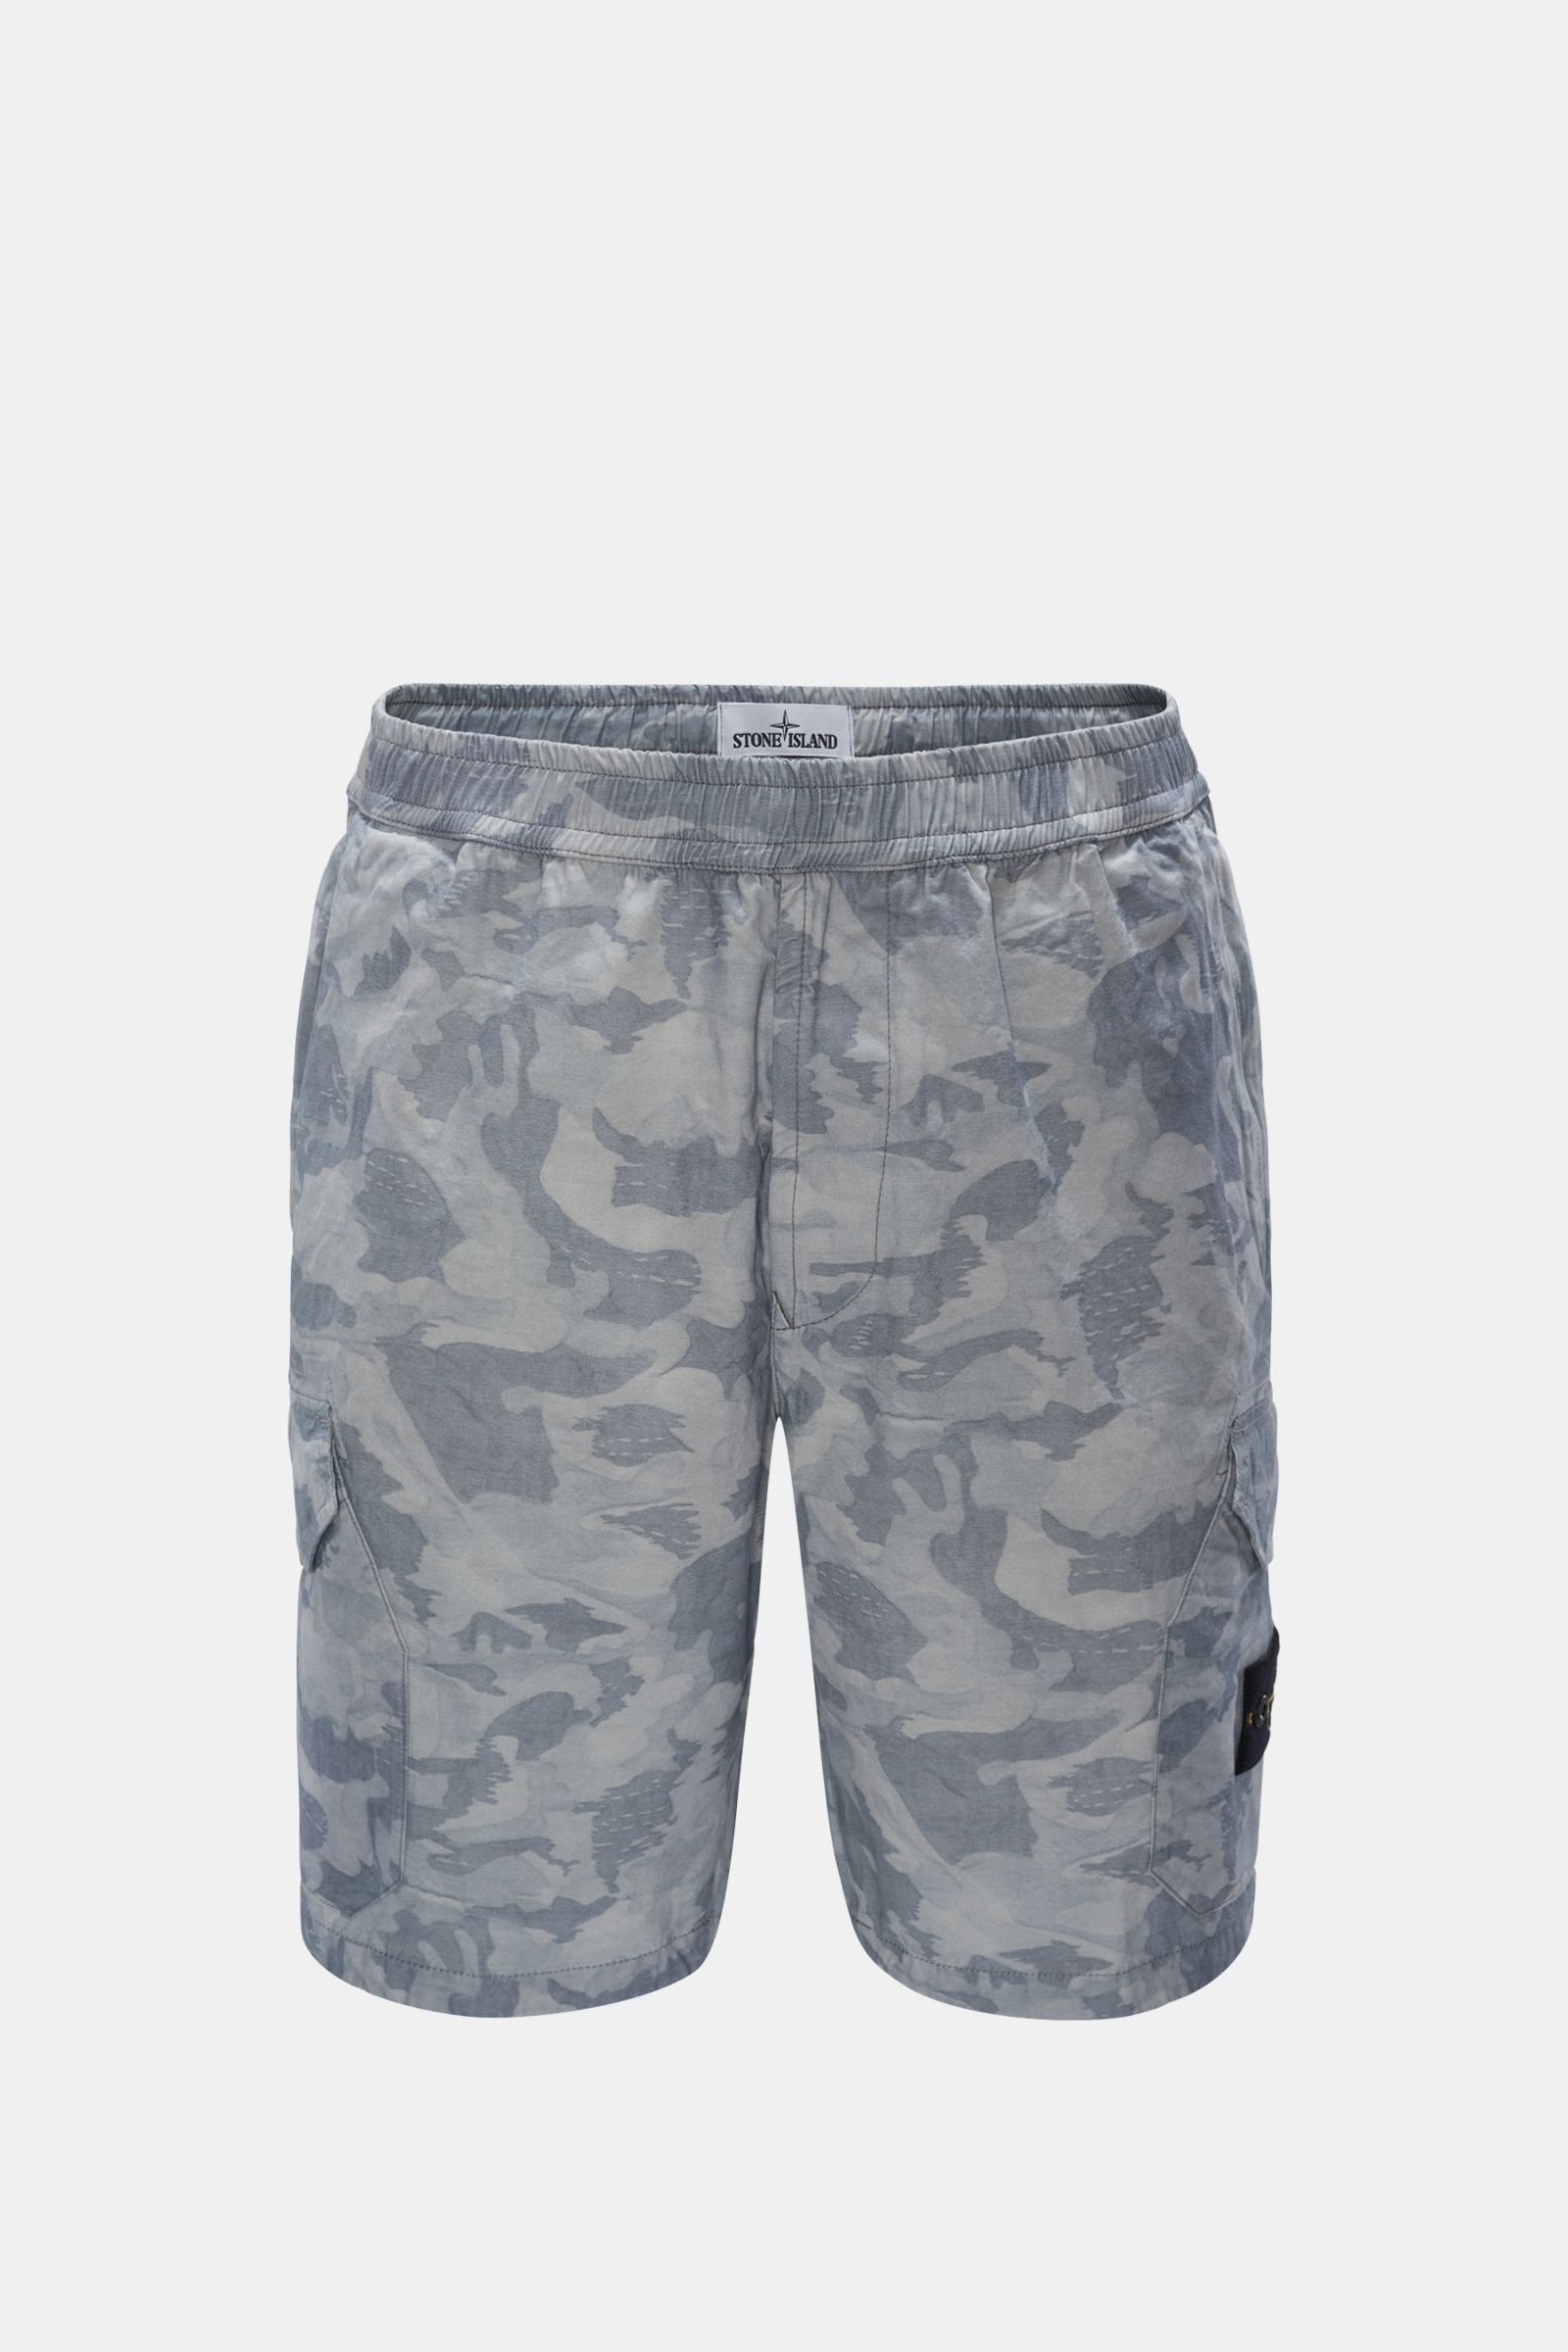 Cargo shorts grey-blue patterned